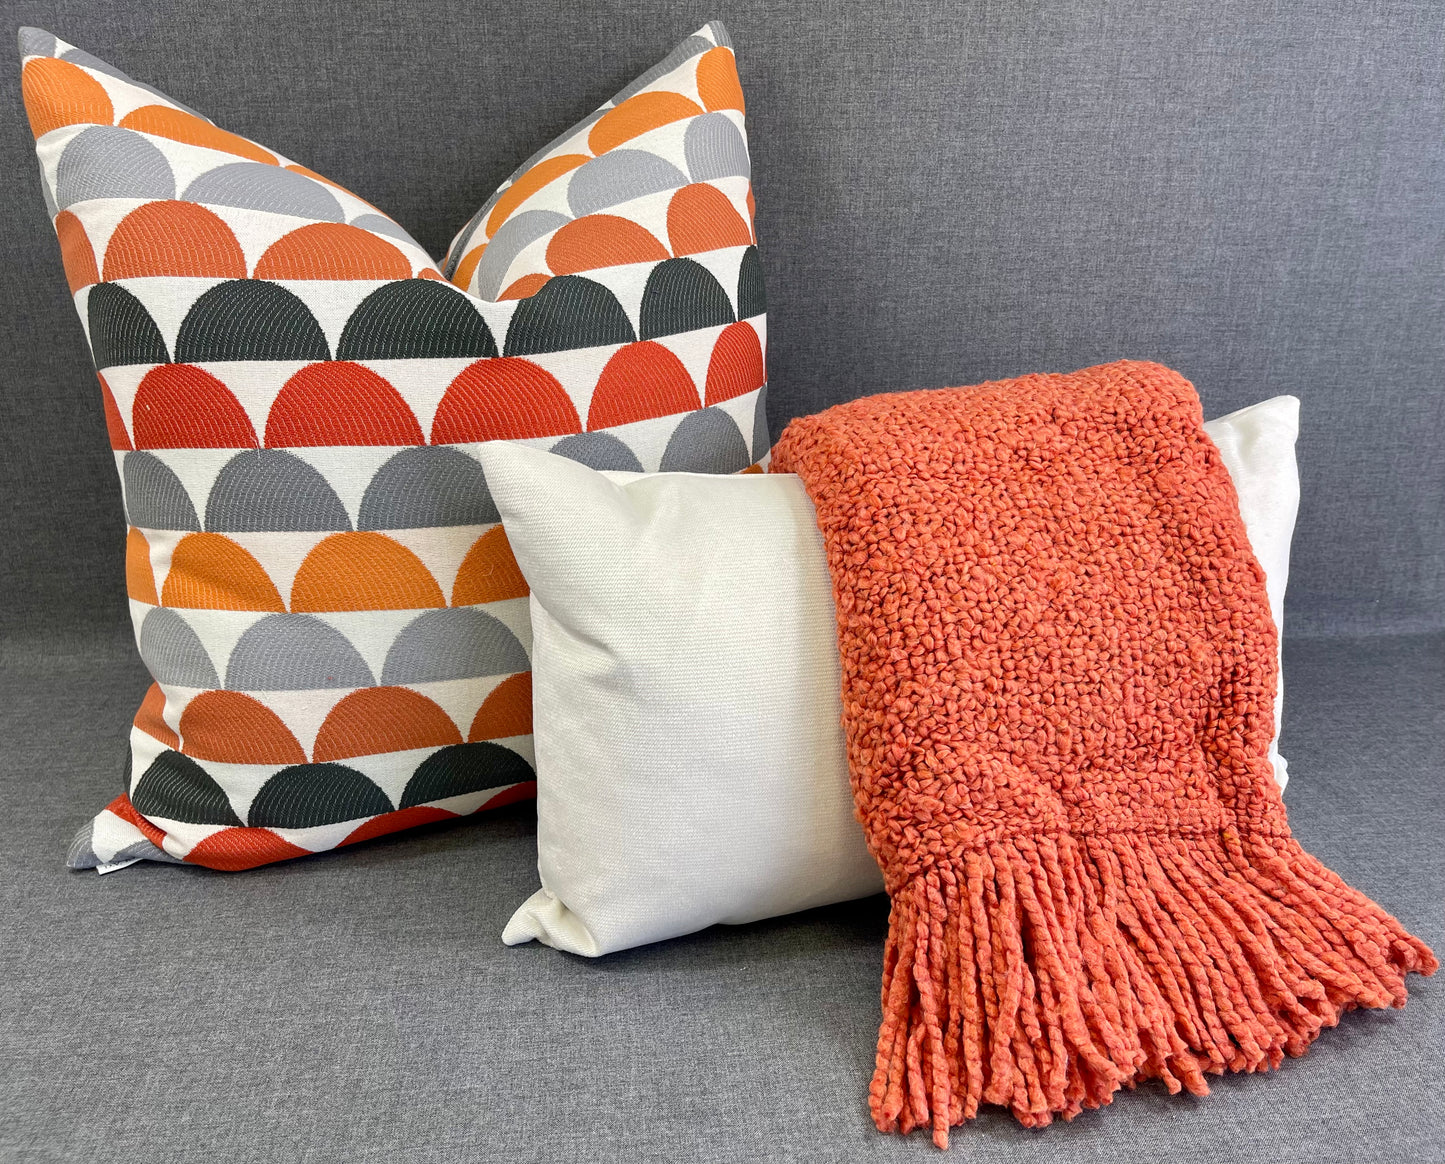 Luxury Knit Throw - 52" x 62" -  Valencia; velvety soft knit throw in a lovely, bright orange